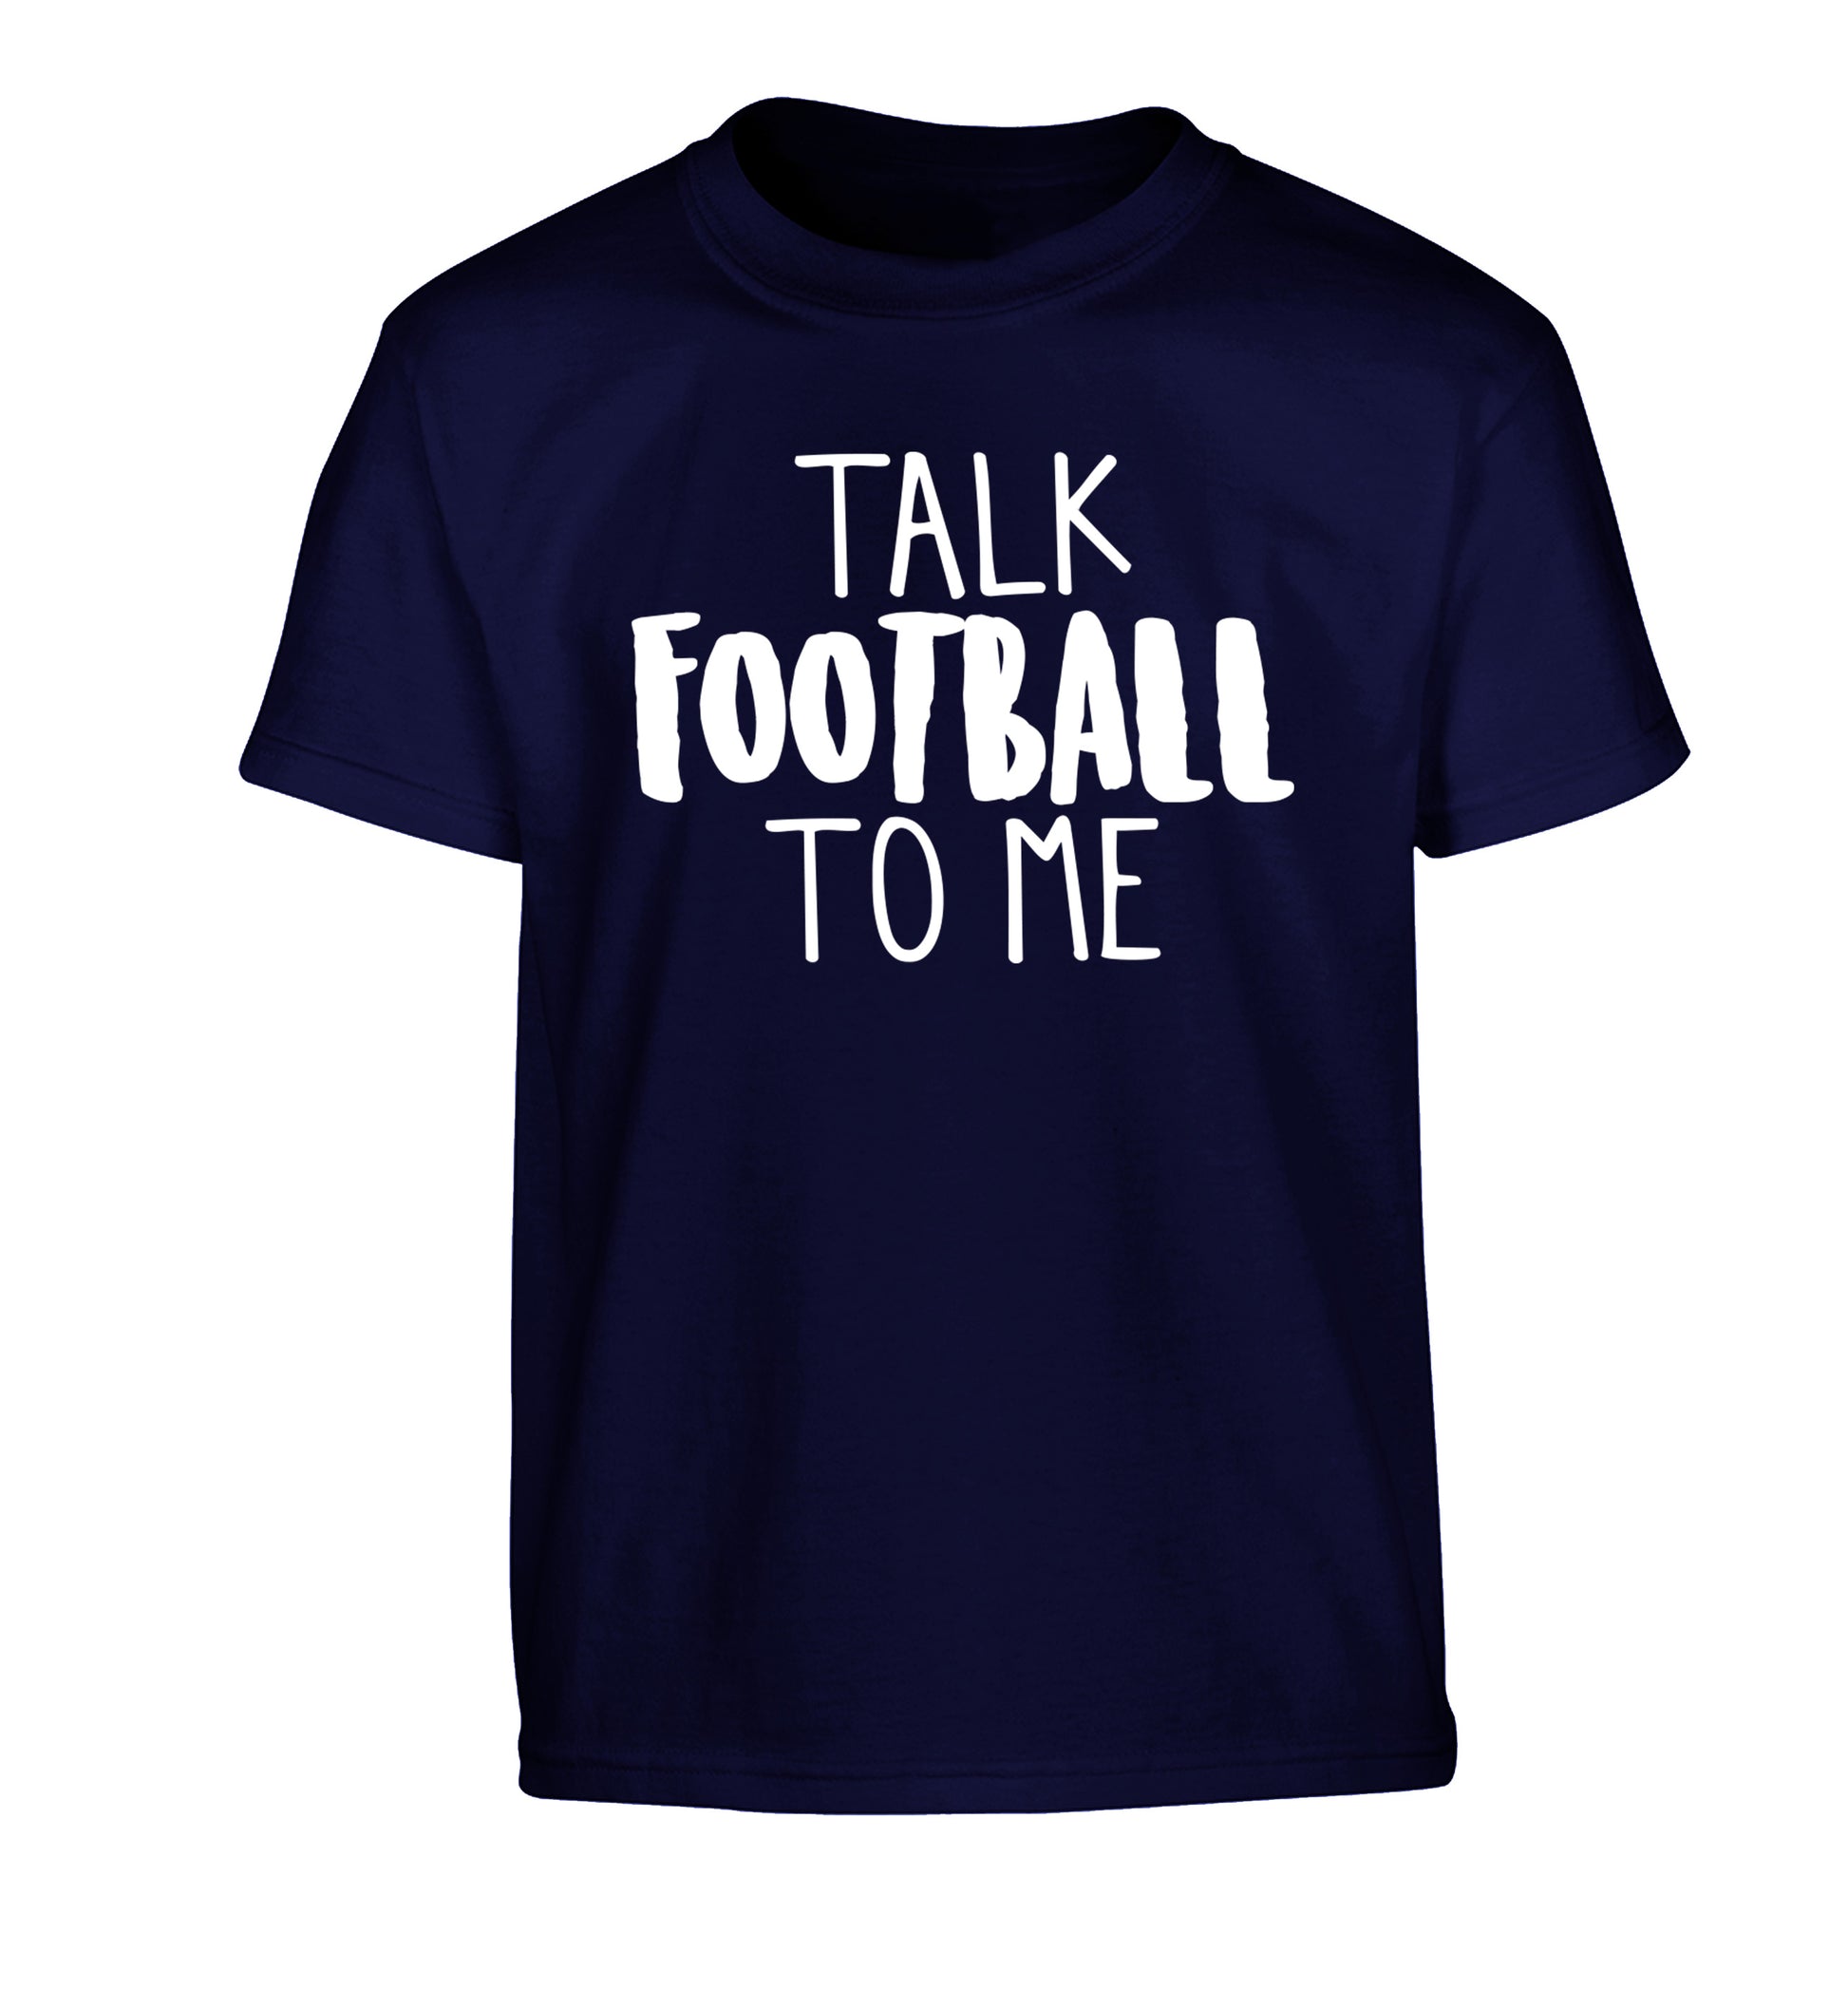 Talk football to me Children's navy Tshirt 12-14 Years